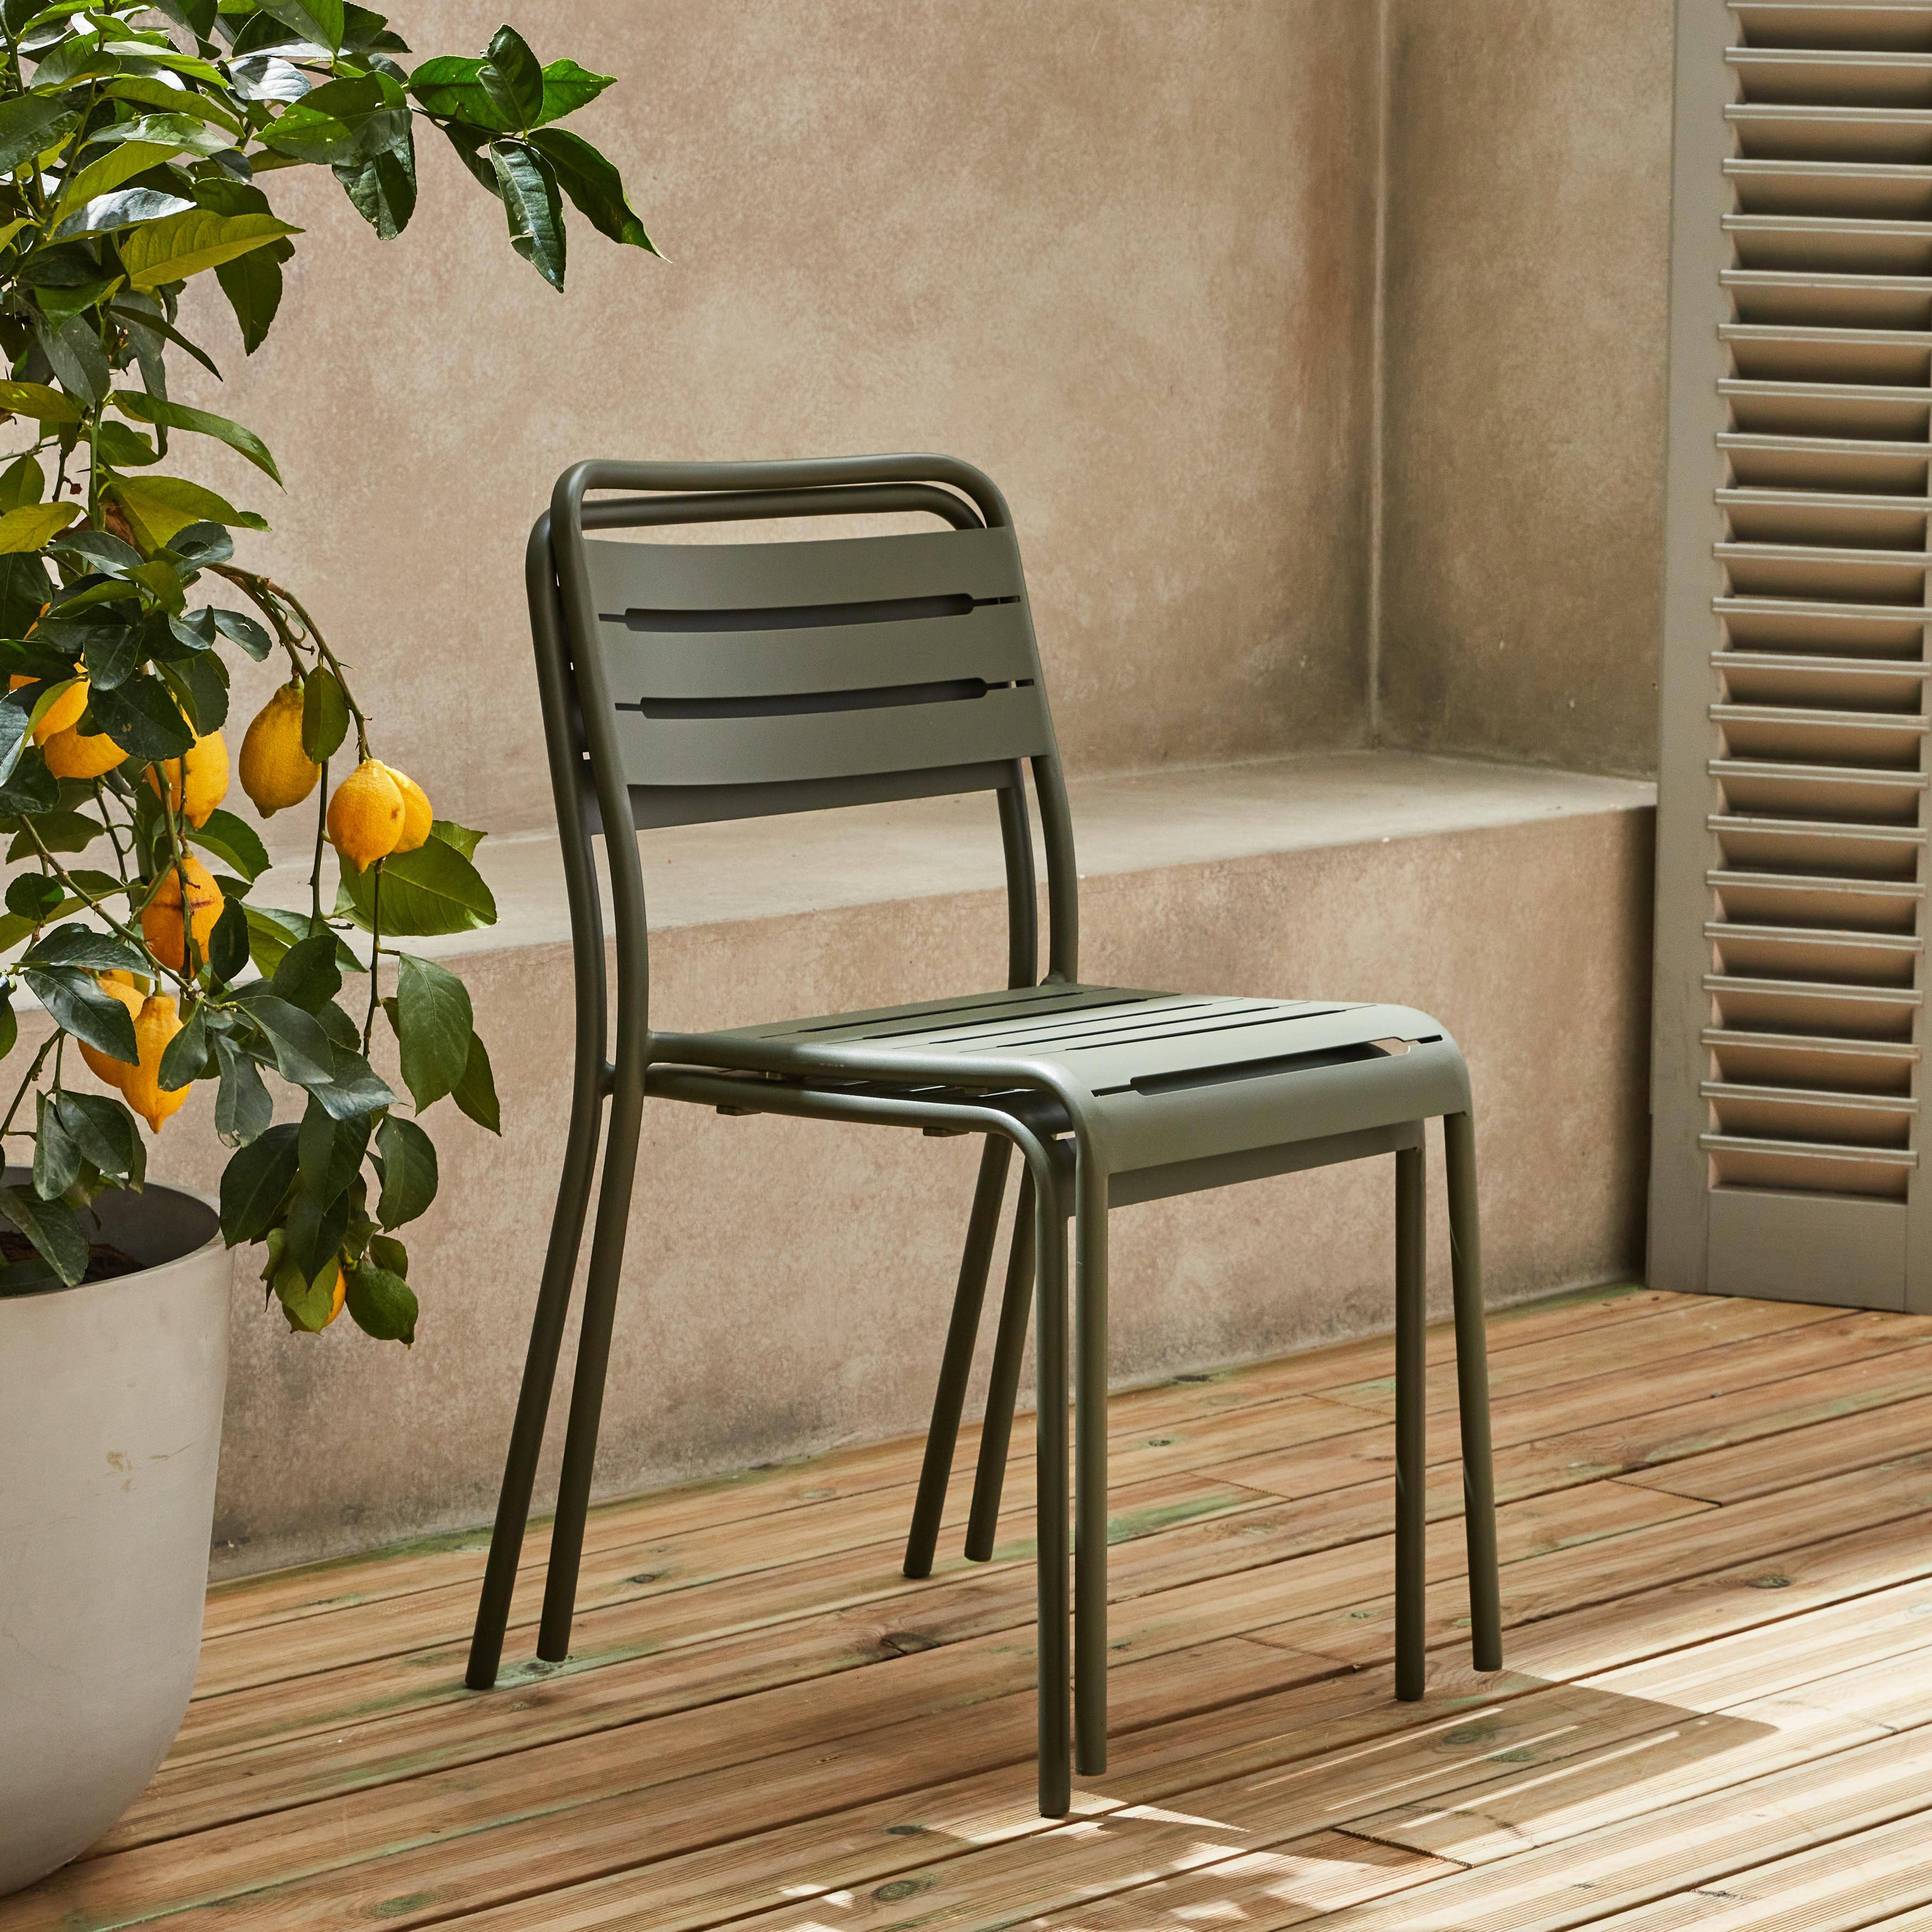 Pair of bistro steel garden chairs, stackable, W44xD52xH79cm, Khaki Green,sweeek,Photo3